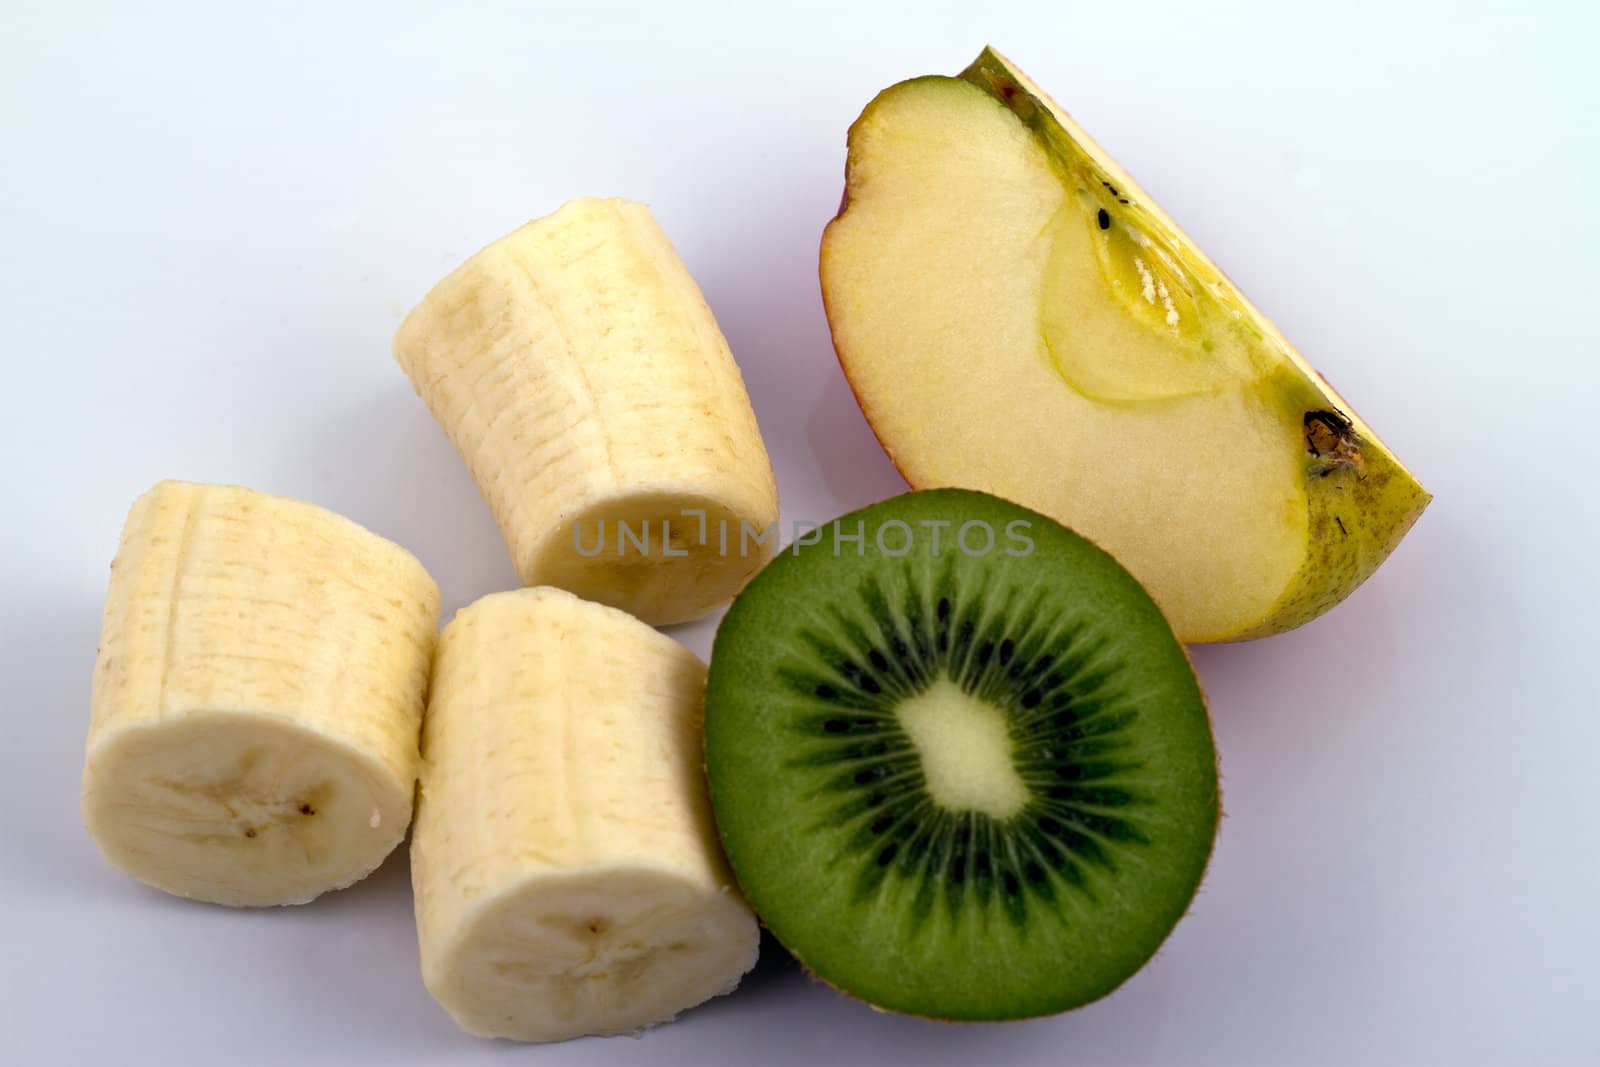 Banana, kiwi and apple pieces on reflecting white surface